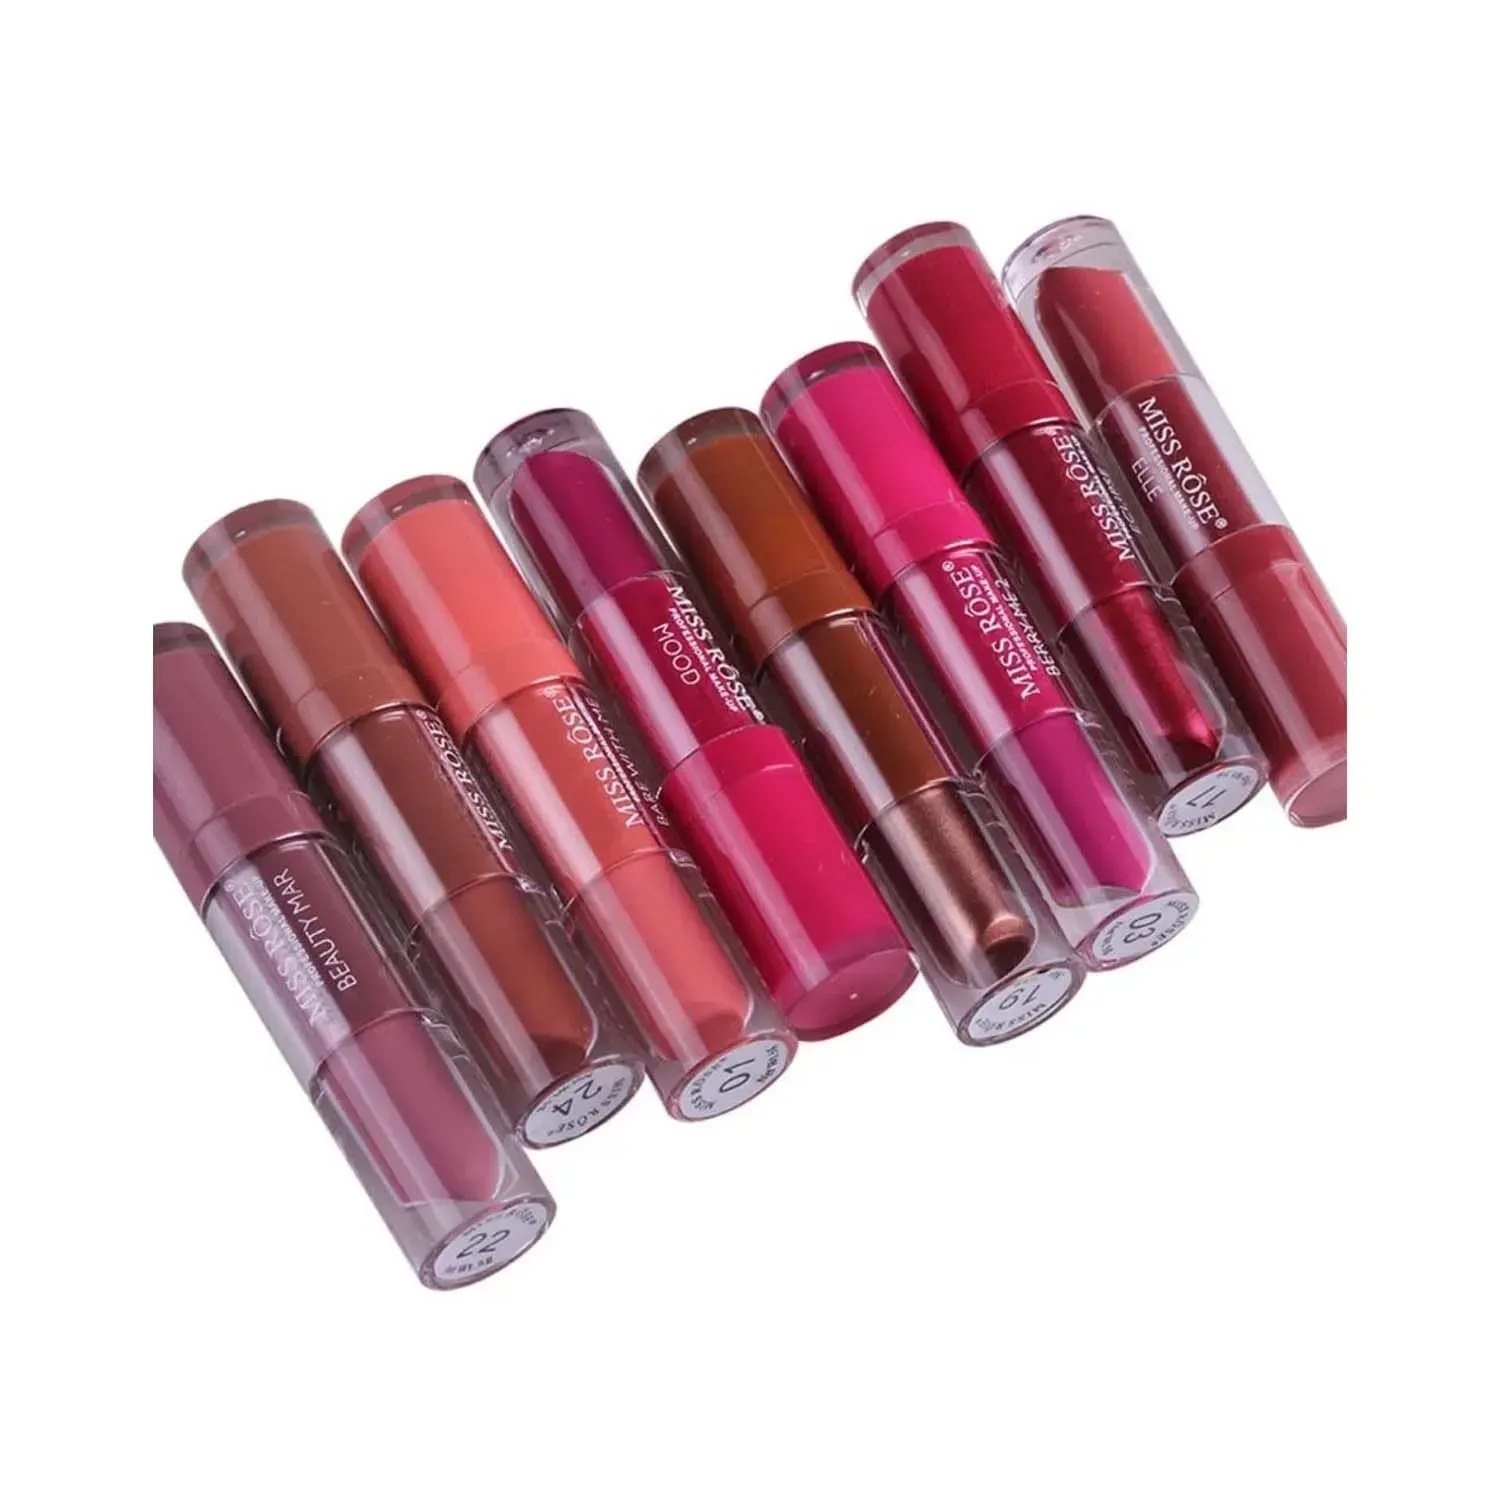 Buy Miss Rose Berry Me Matte Velvet Lipgloss Pigment Colors Nude